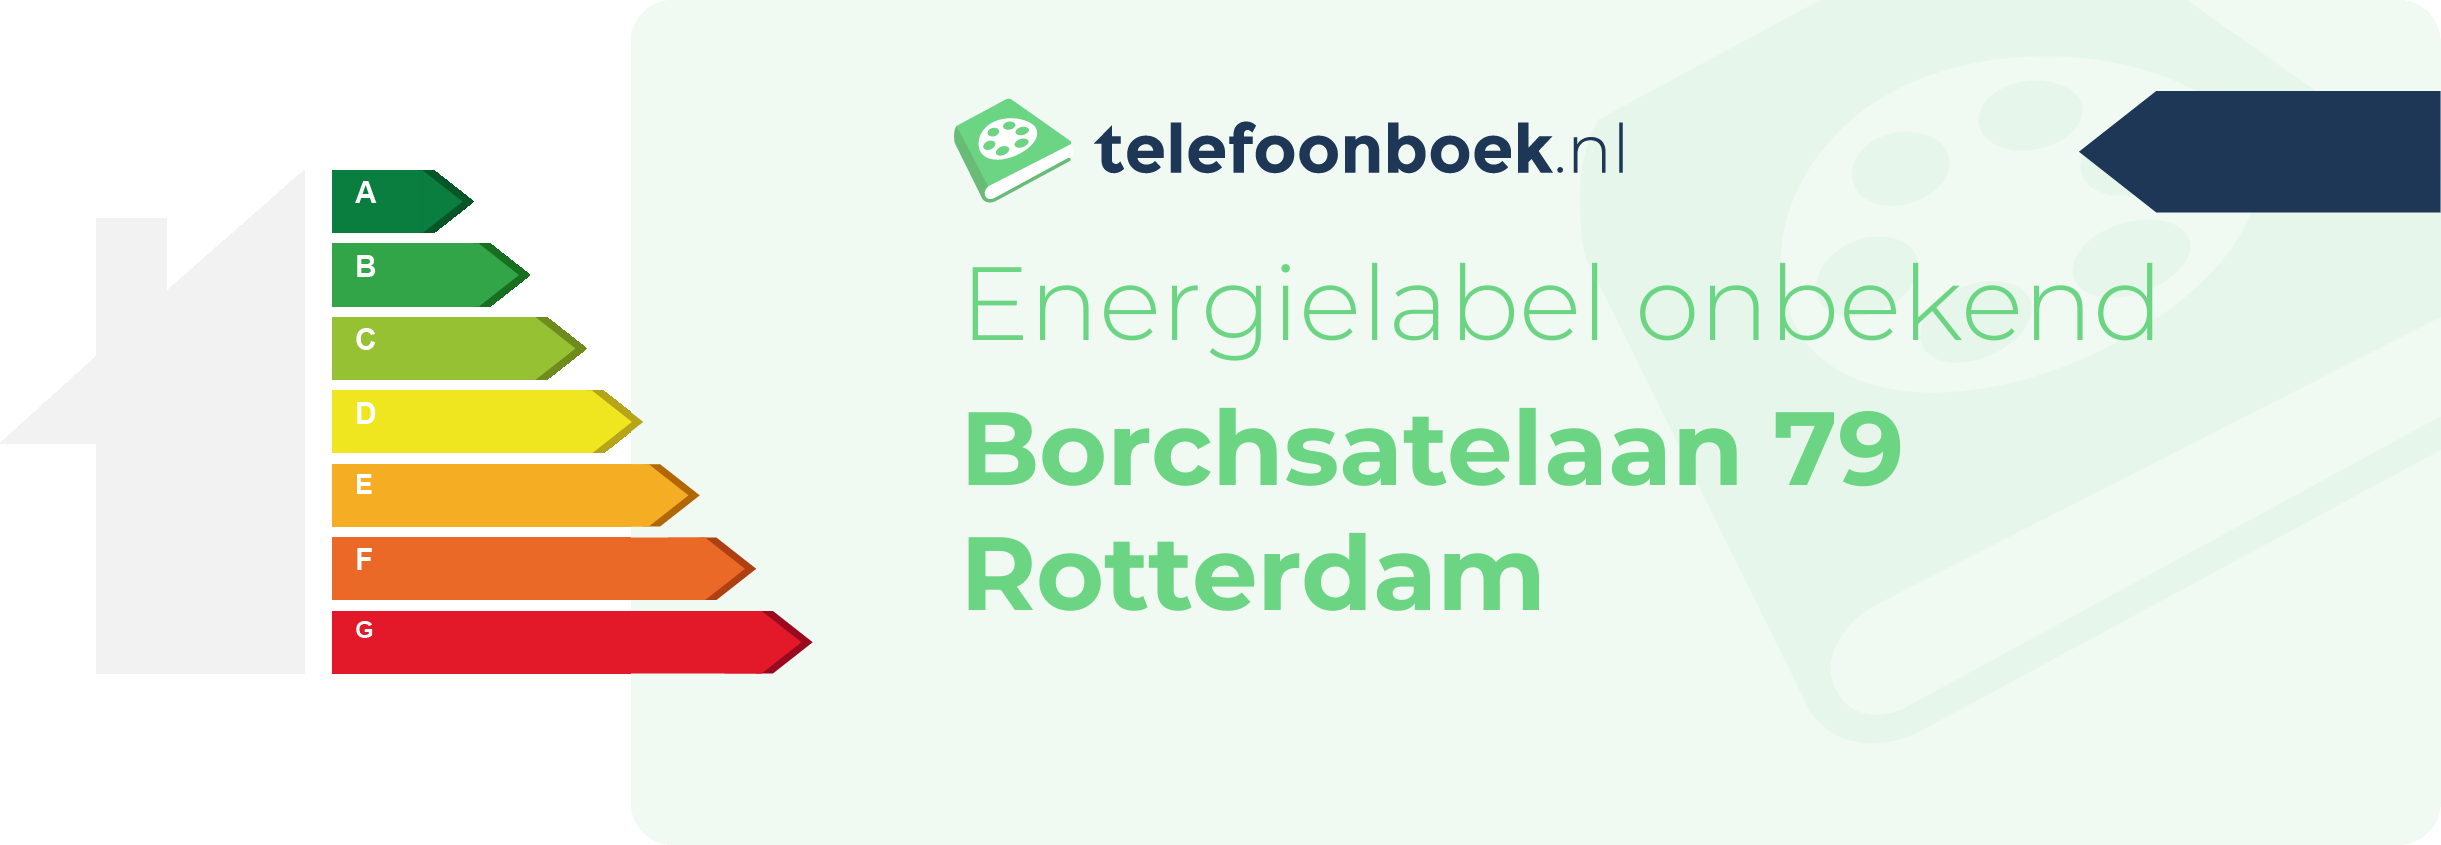 Energielabel Borchsatelaan 79 Rotterdam